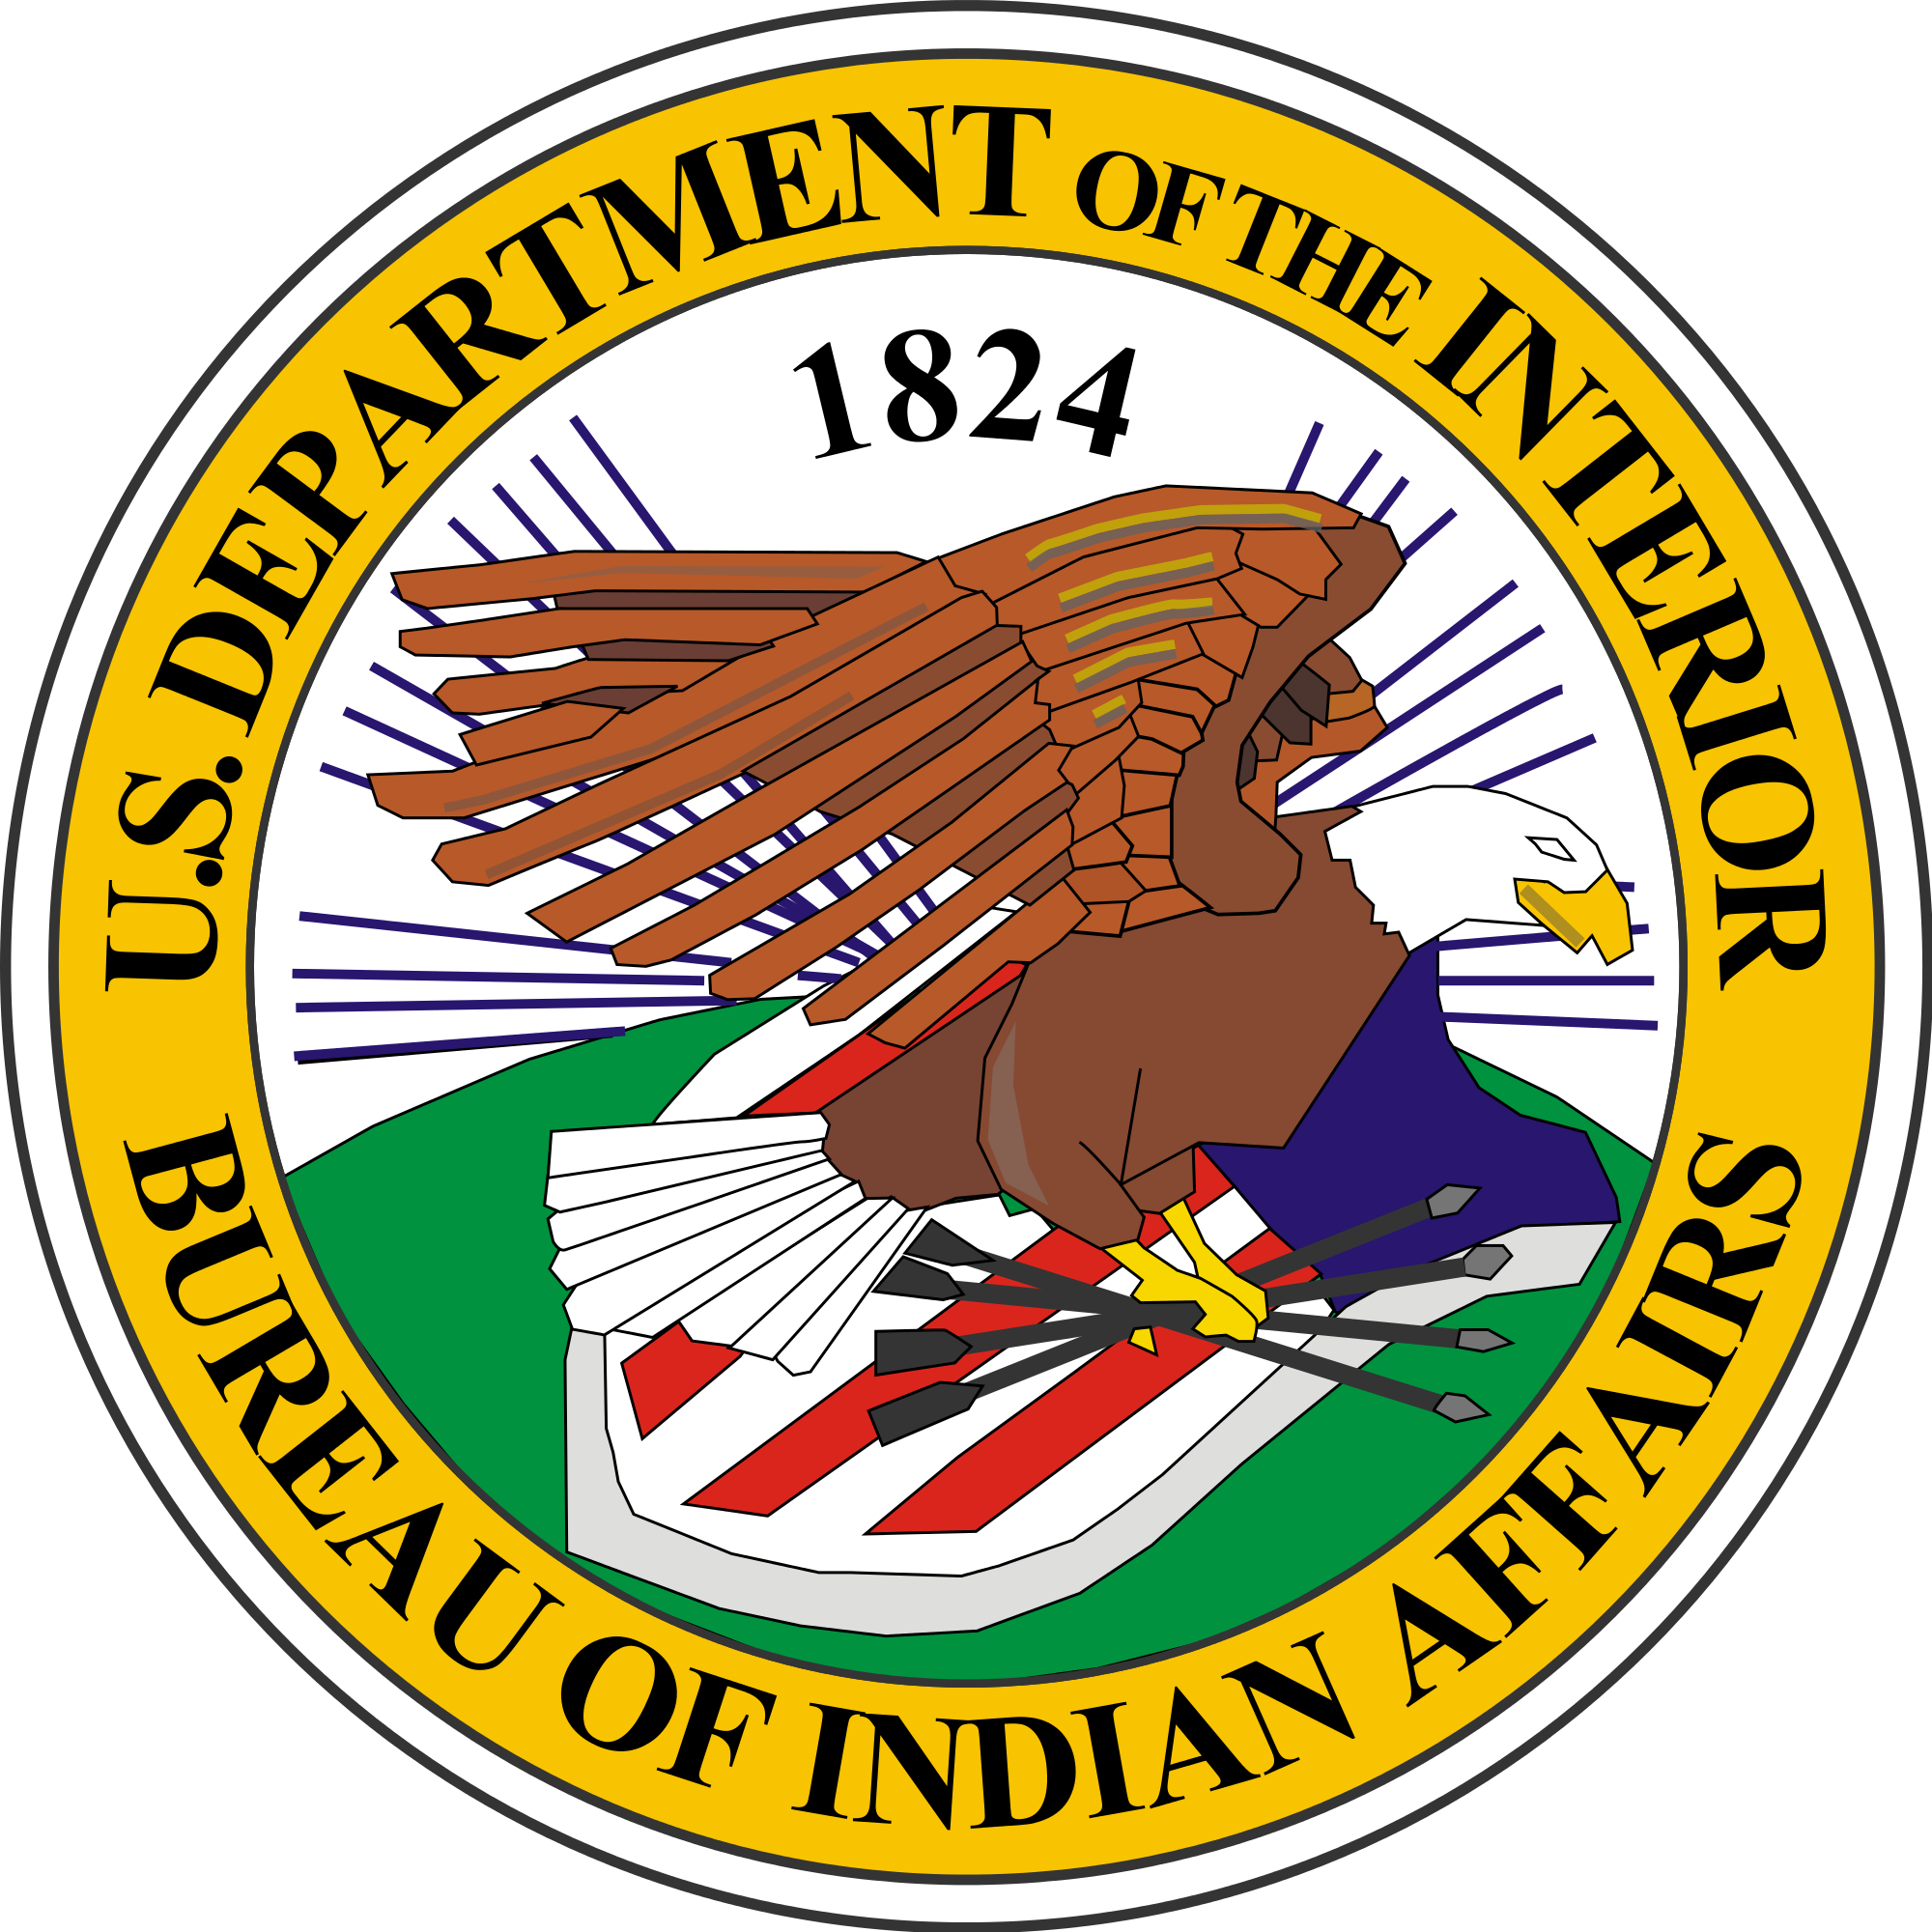 
											Bureau of Indian Affairs